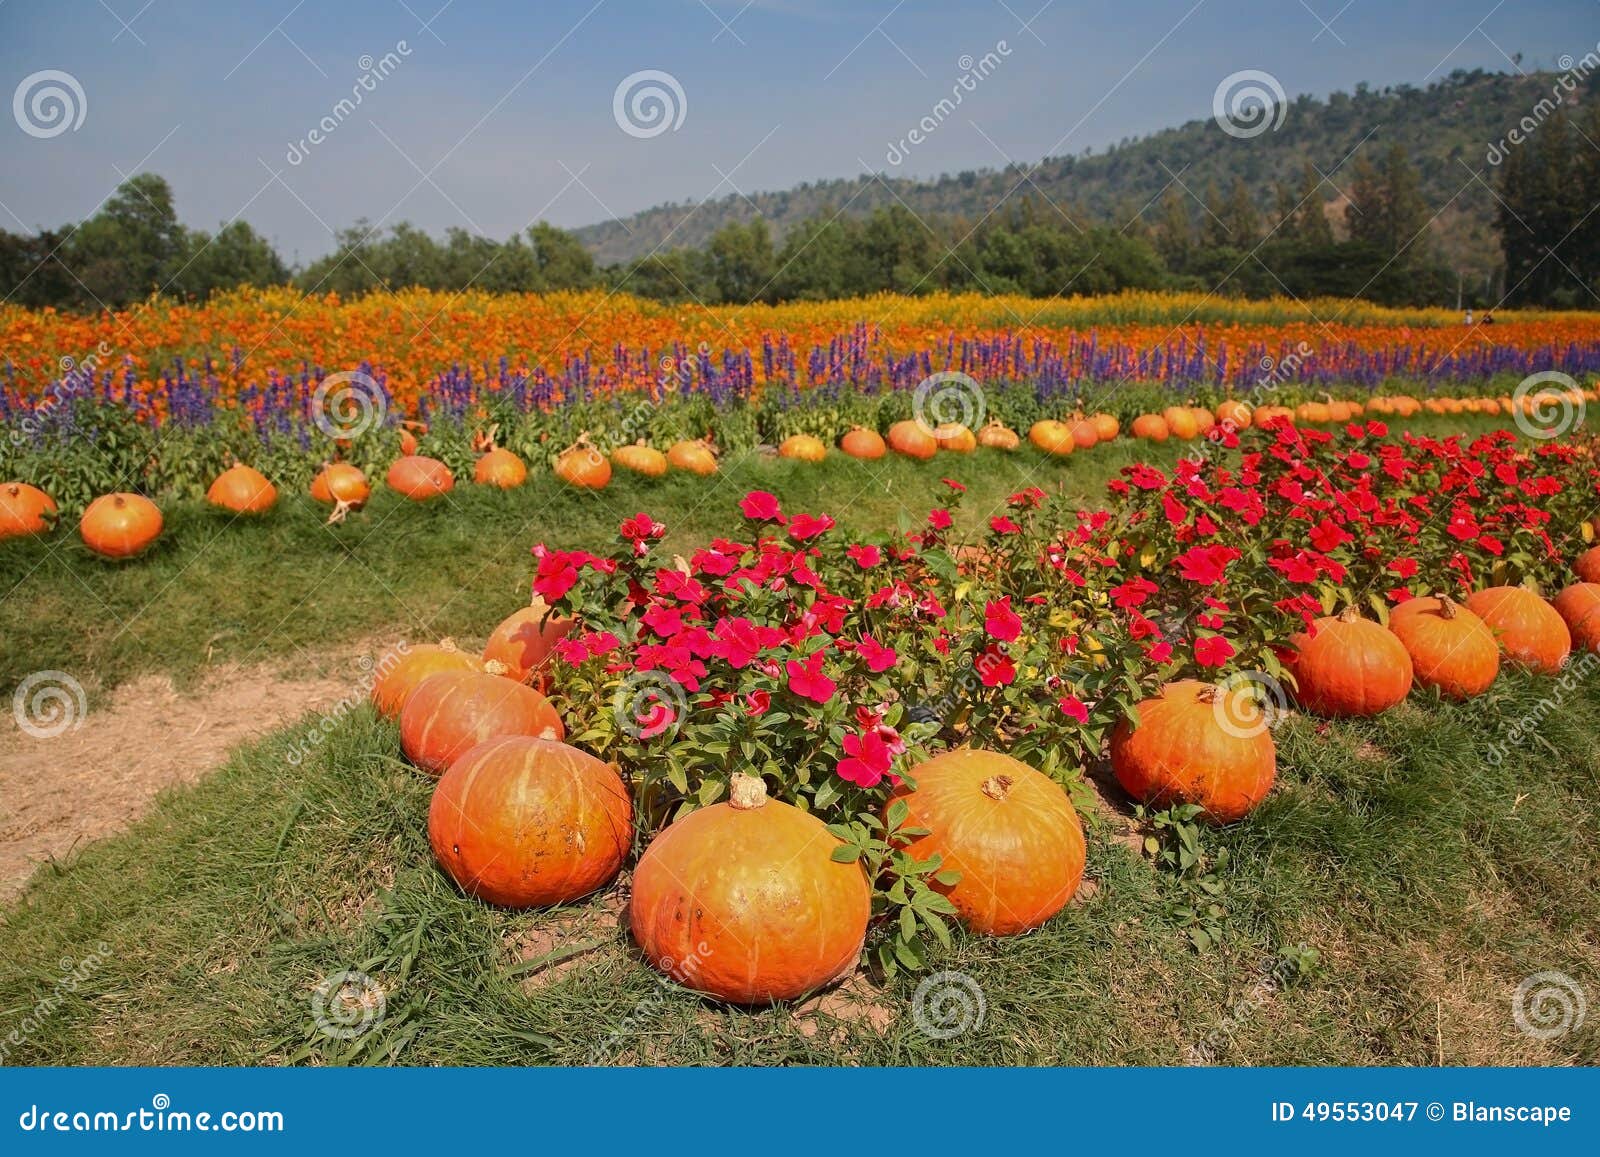 pumpkin and flower garden at jim thomson farm